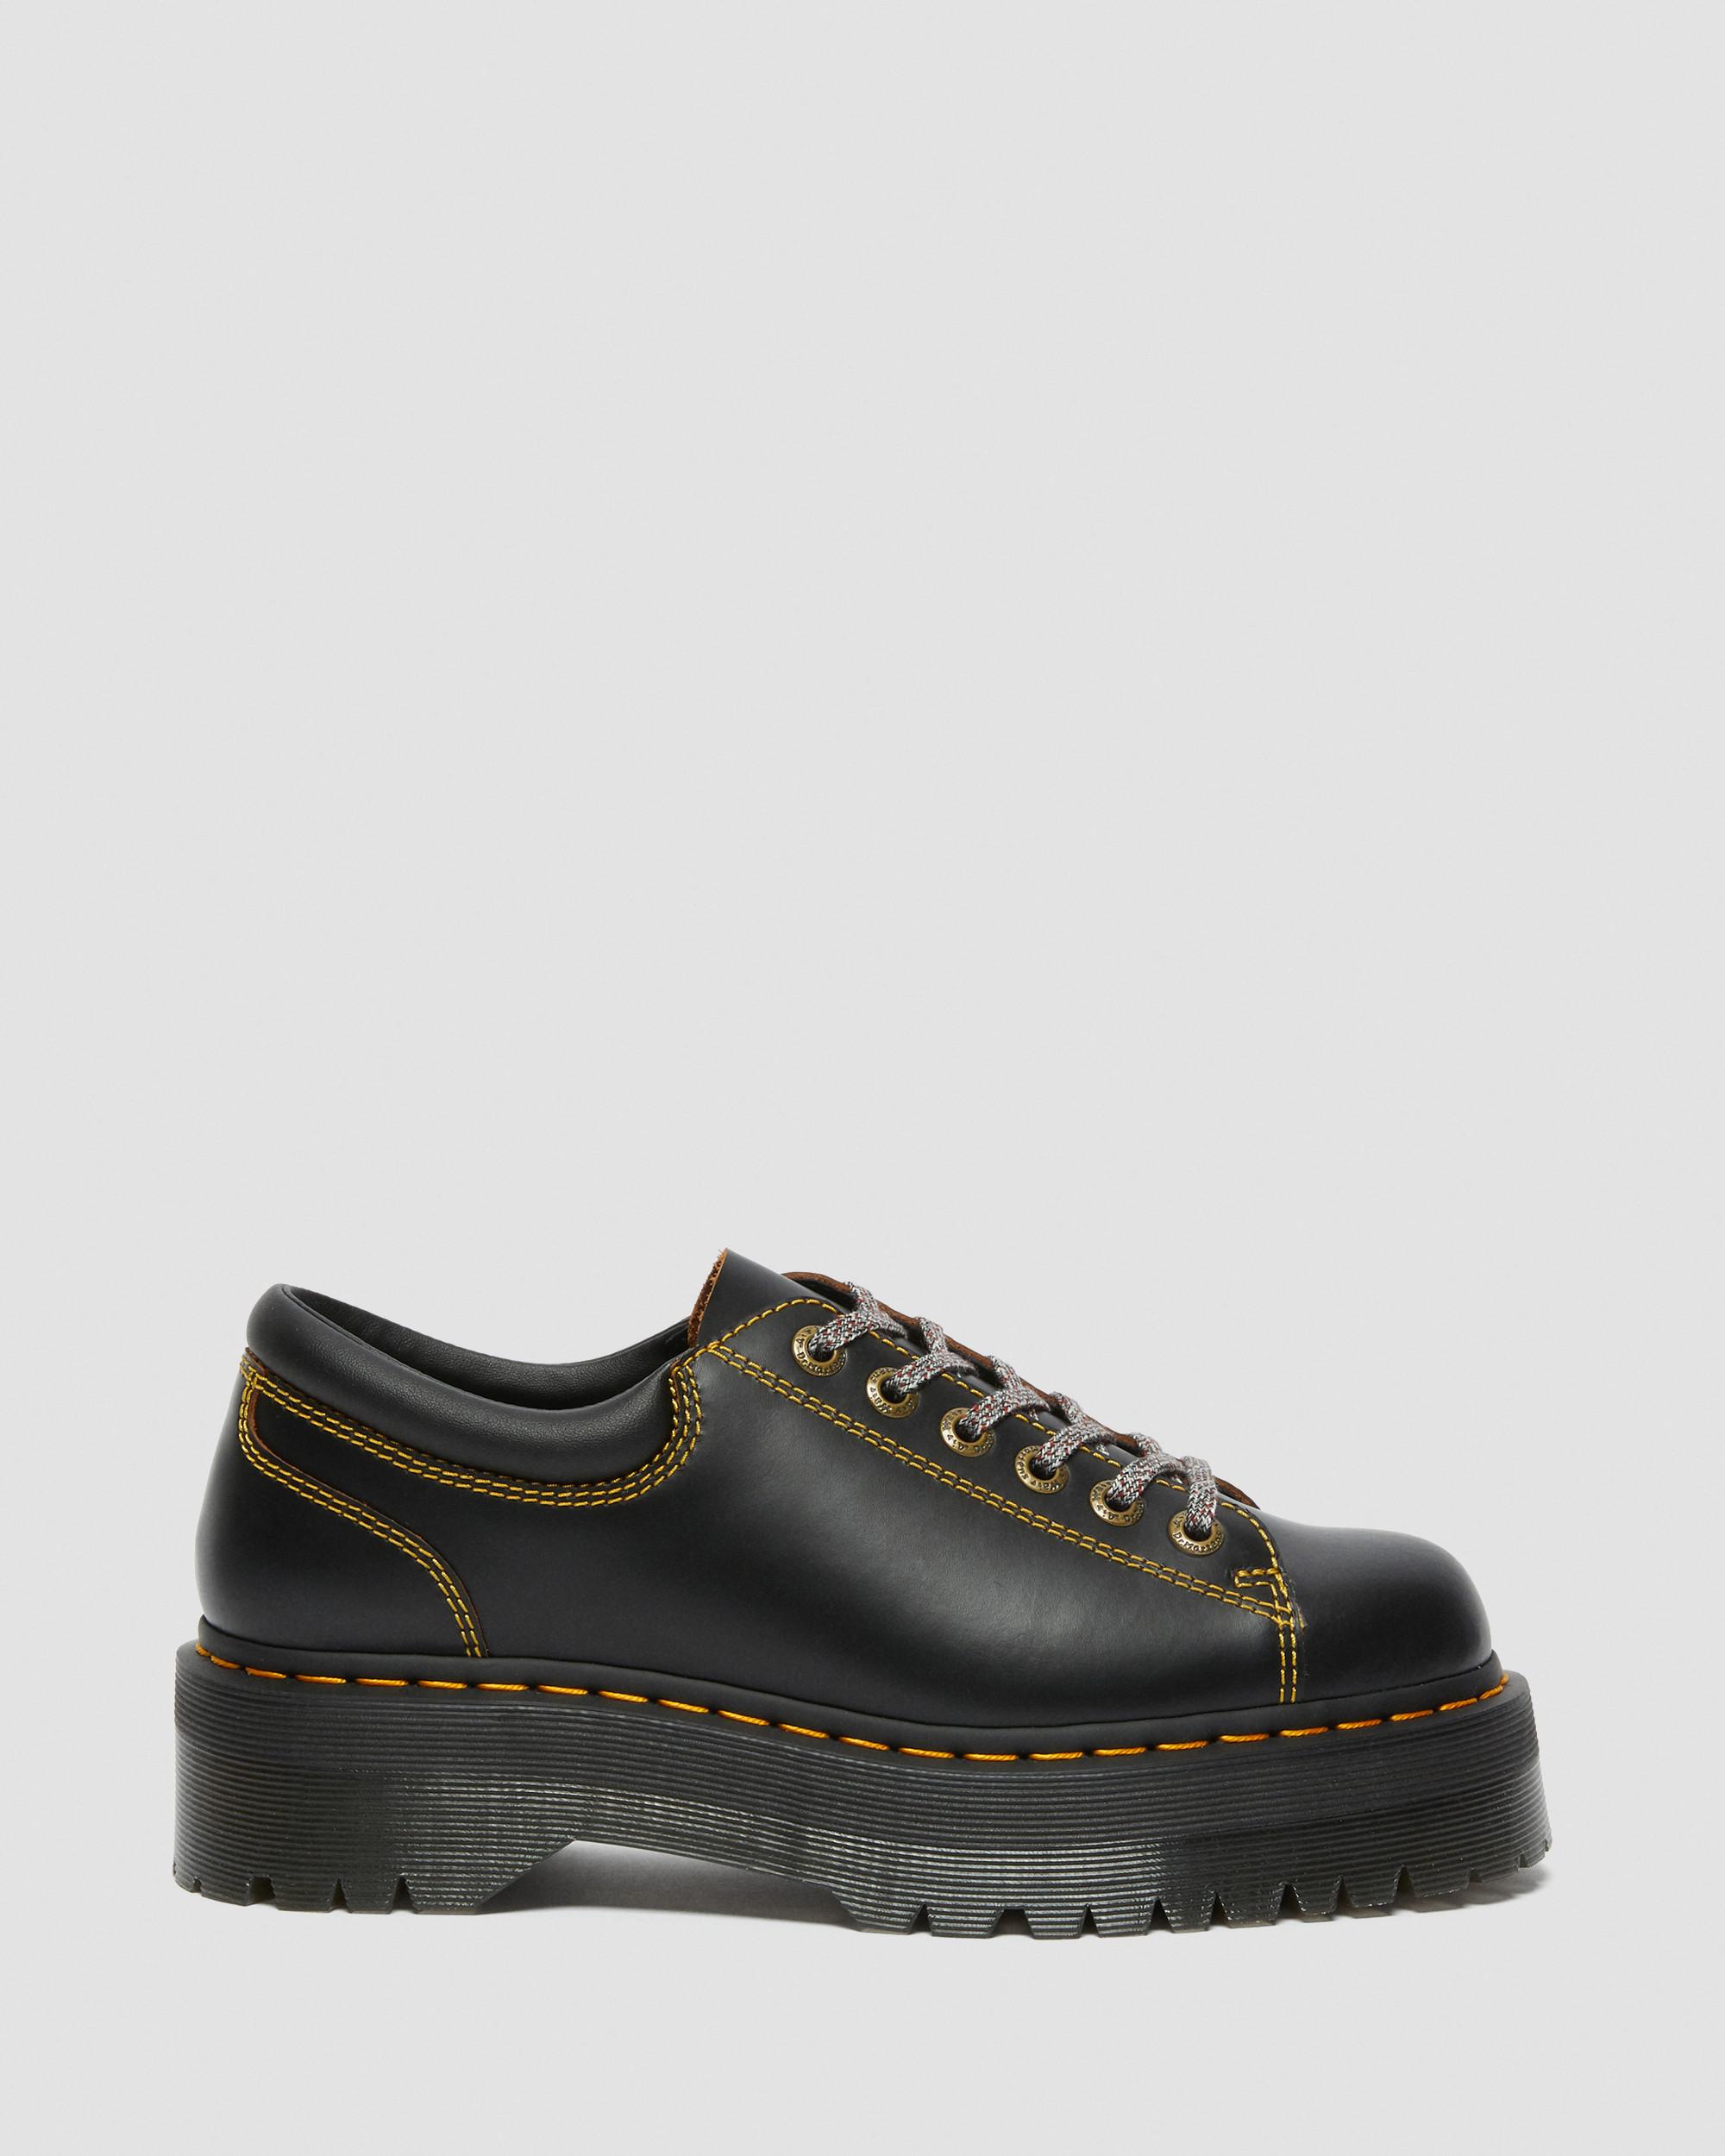 Dr Martens KOREY Black shoes US sizes 1-3 Youth 